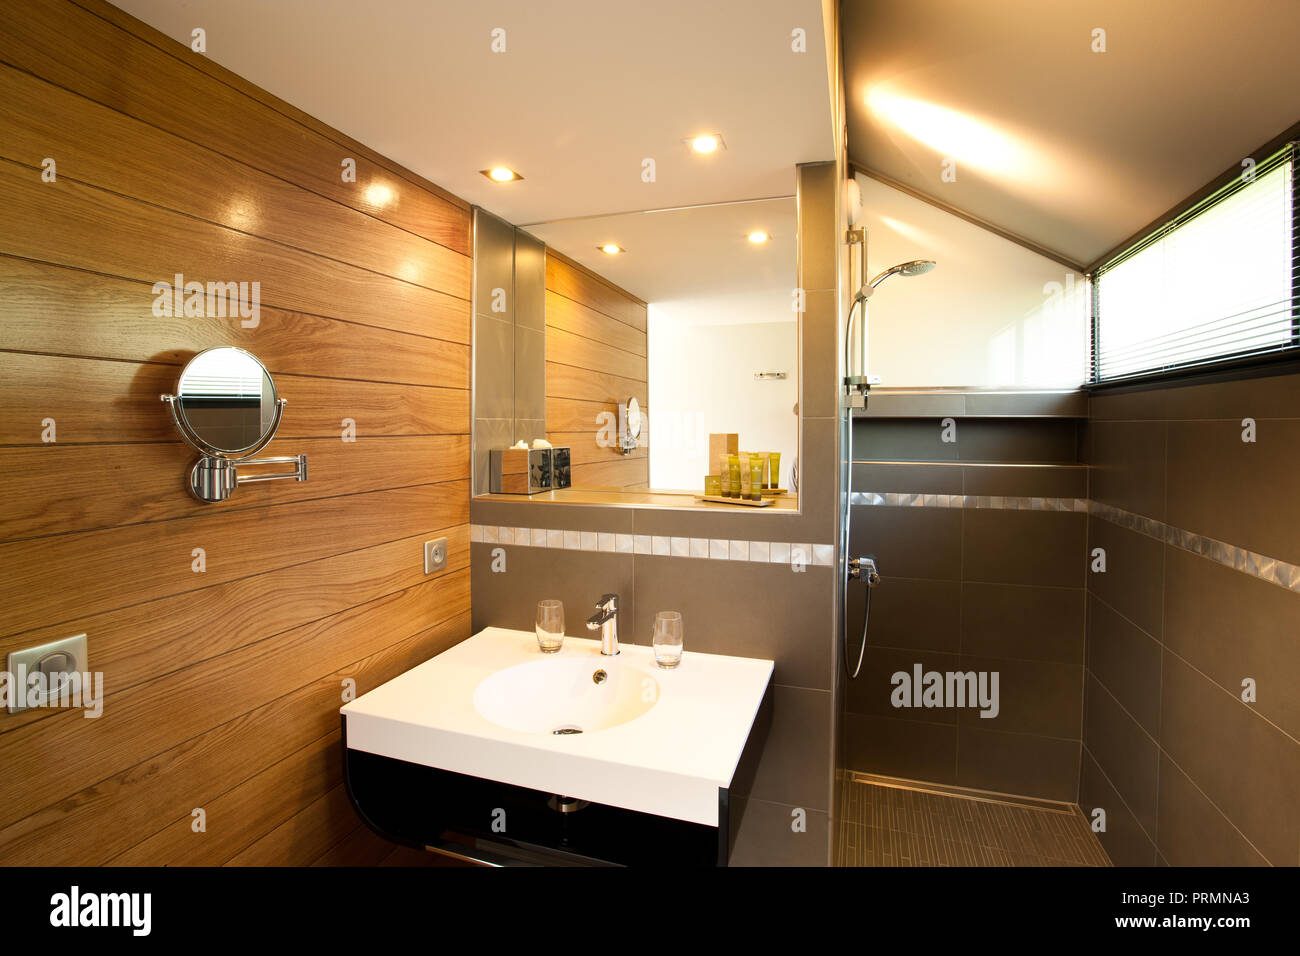 Moderno baño bellamente diseñado Foto de stock